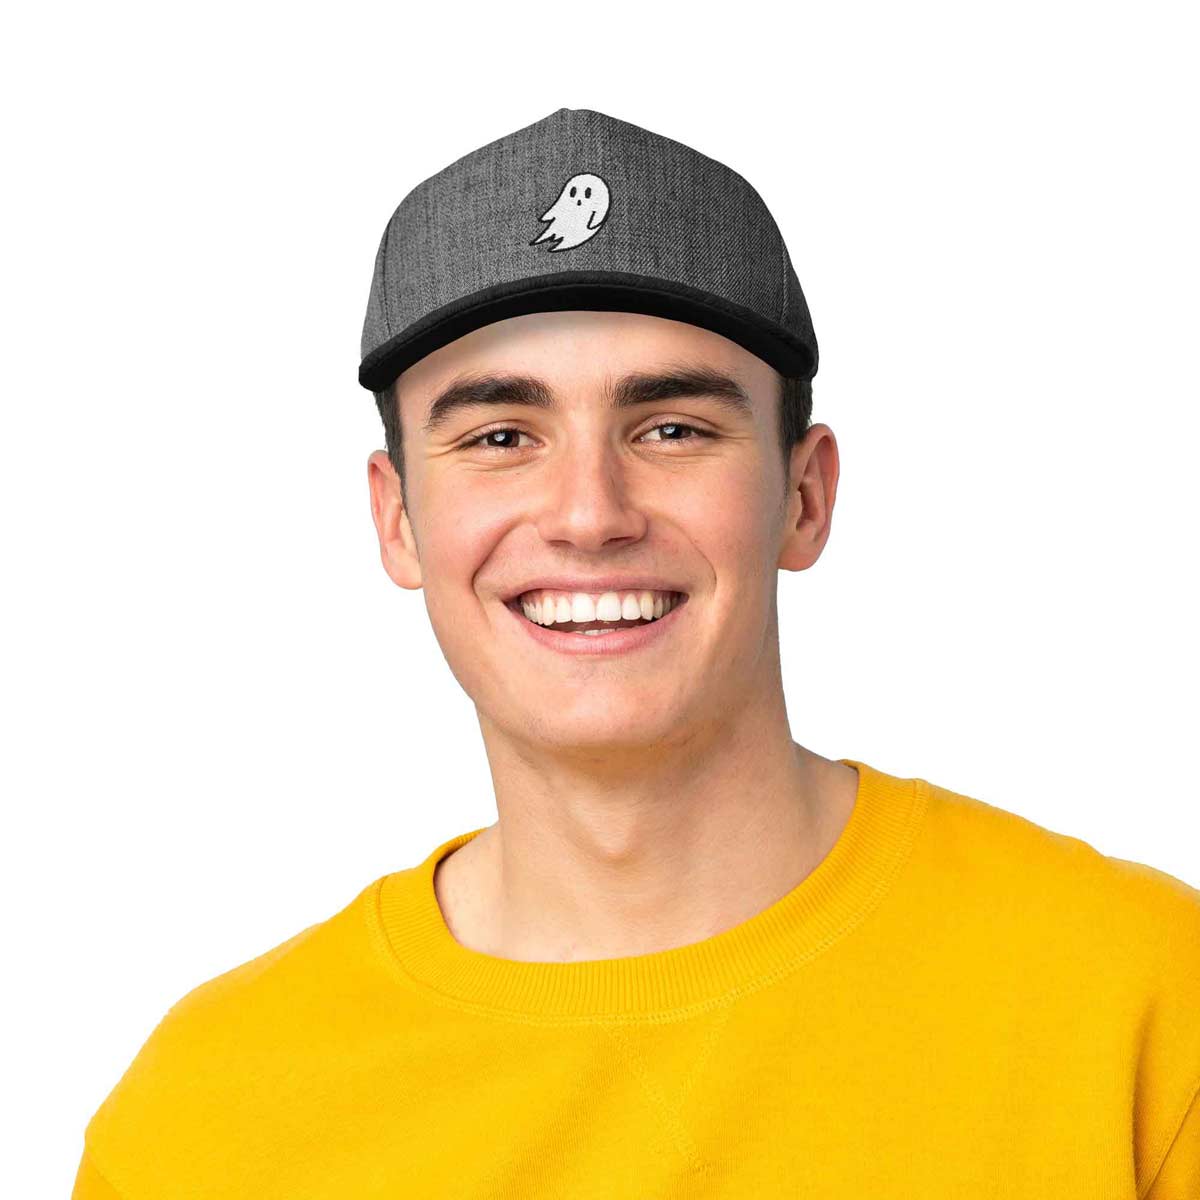 Dalix Ghost Snapback Flat Bill Baseball Hat Embroidered Cap Mens in Light Gray